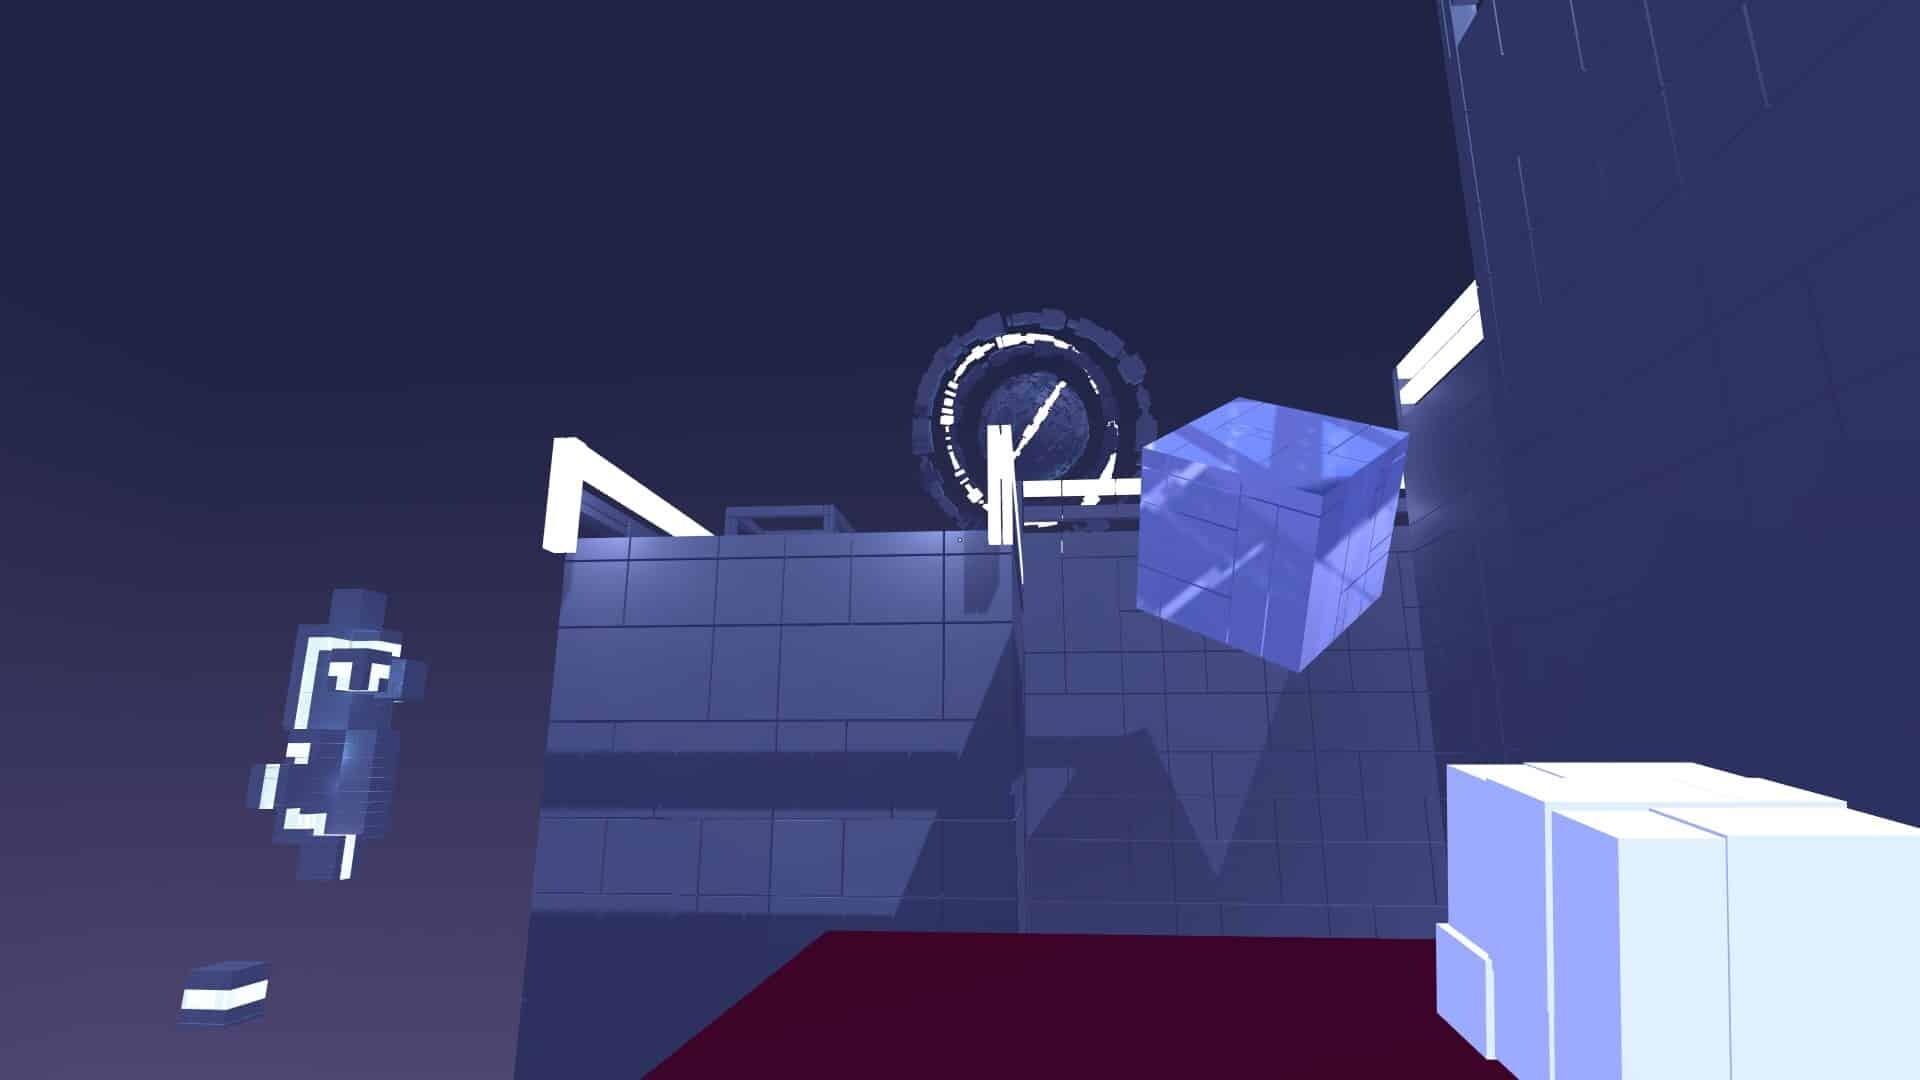 Glitchspace game screenshot, floating objects